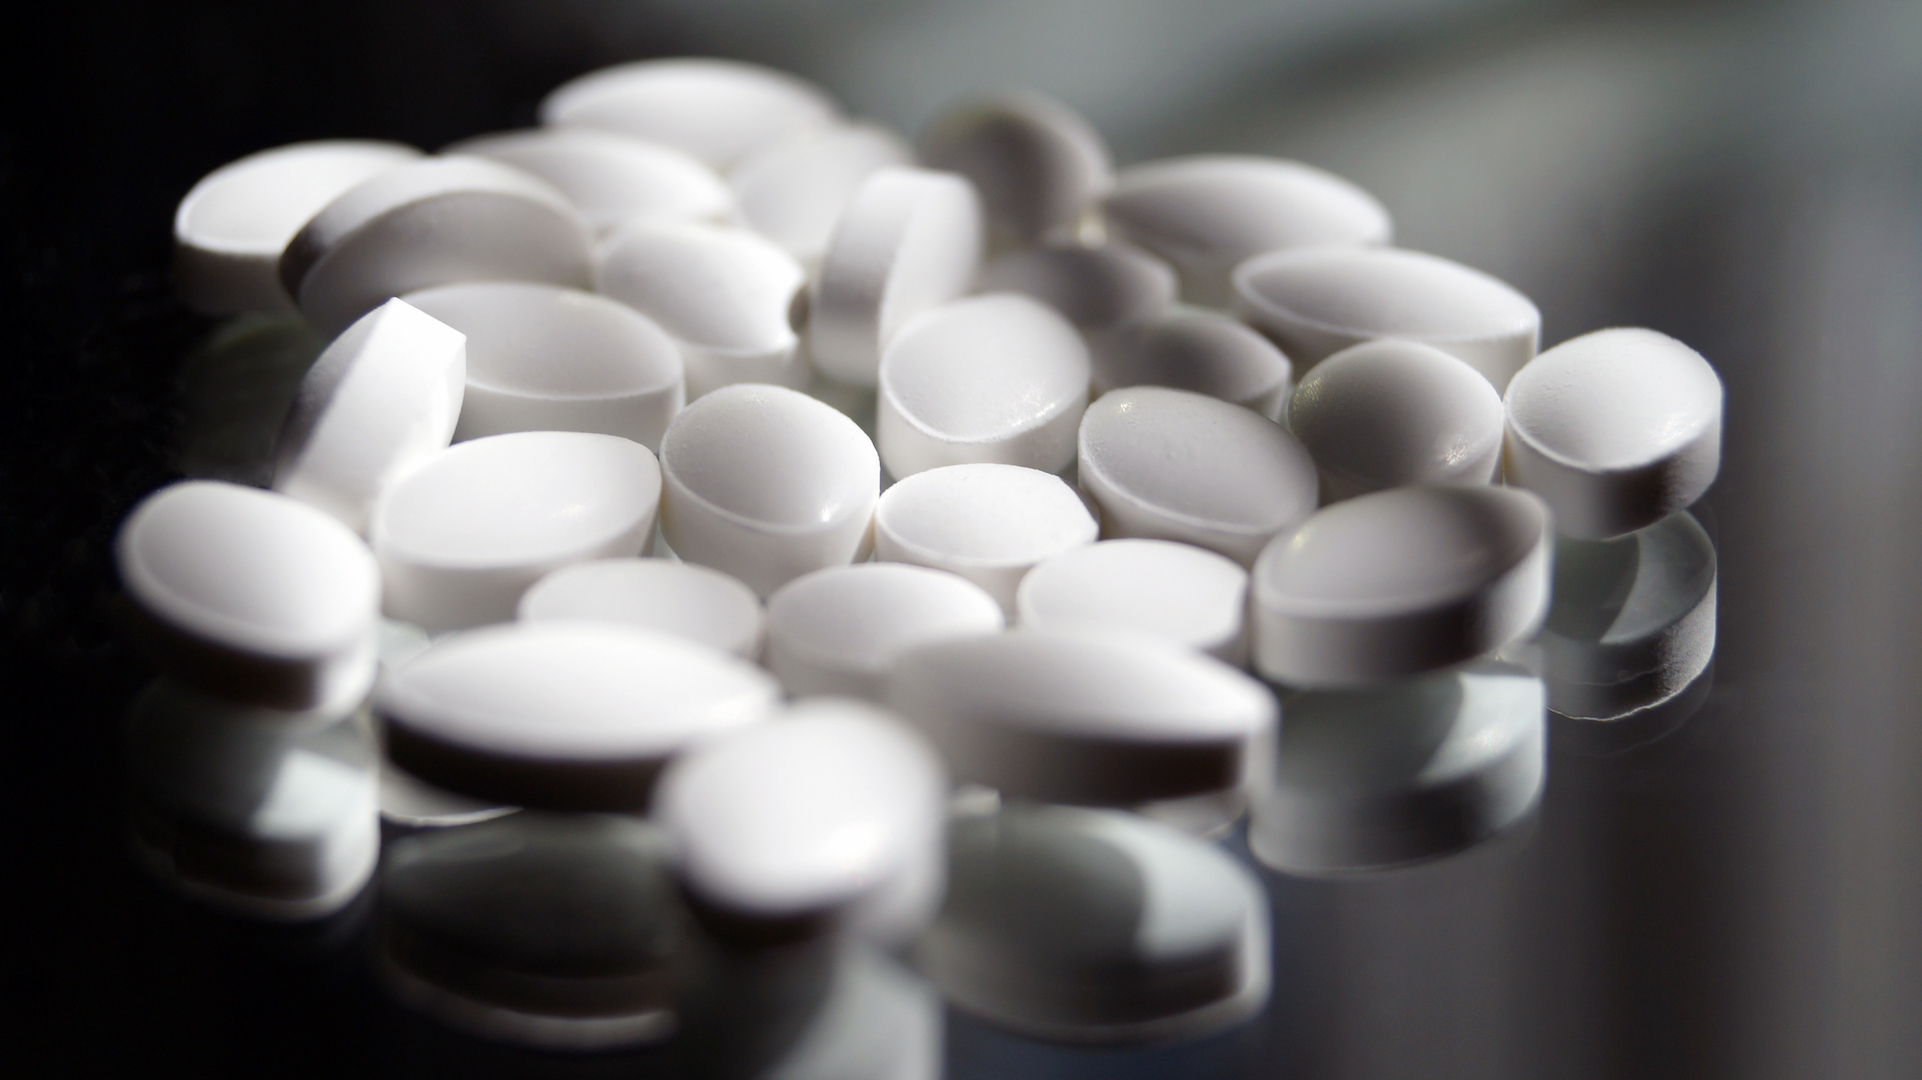 KSA seizes 14.4 million pills of Amphetamine shipped in iron sheets from Lebanon